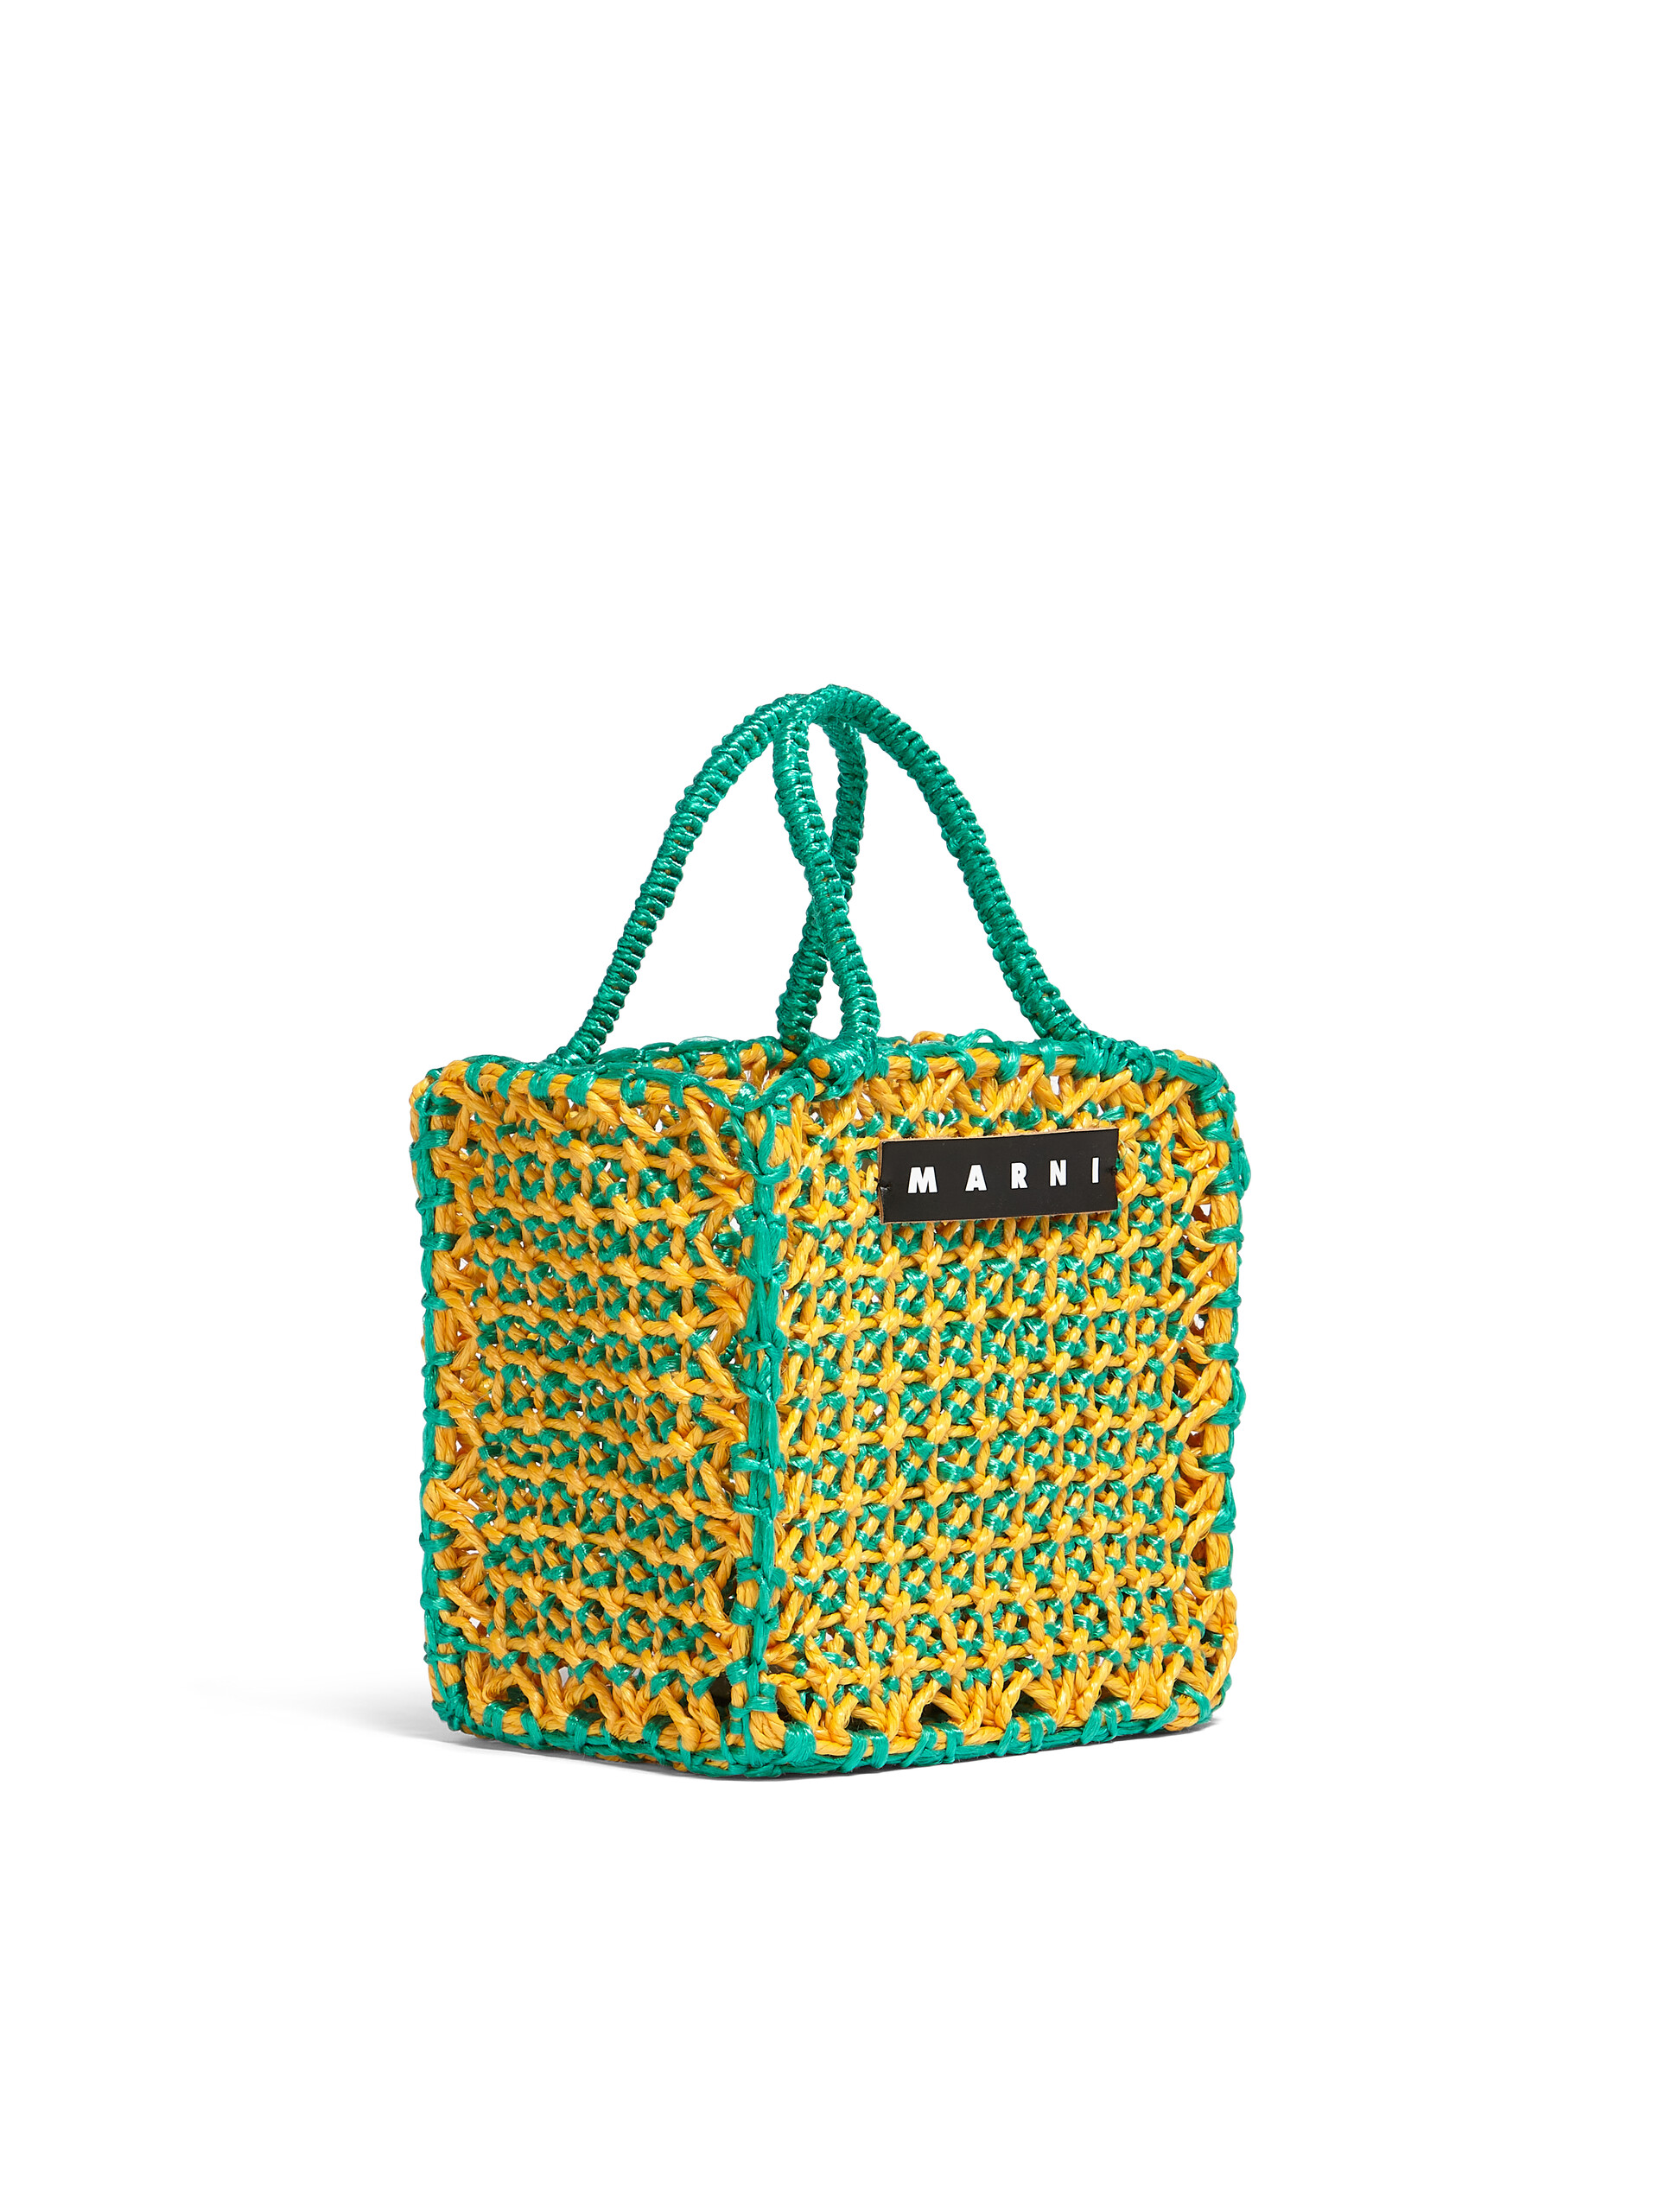 MARNI MARKET JURTA small bag in green and yellow crochet - Bags - Image 2